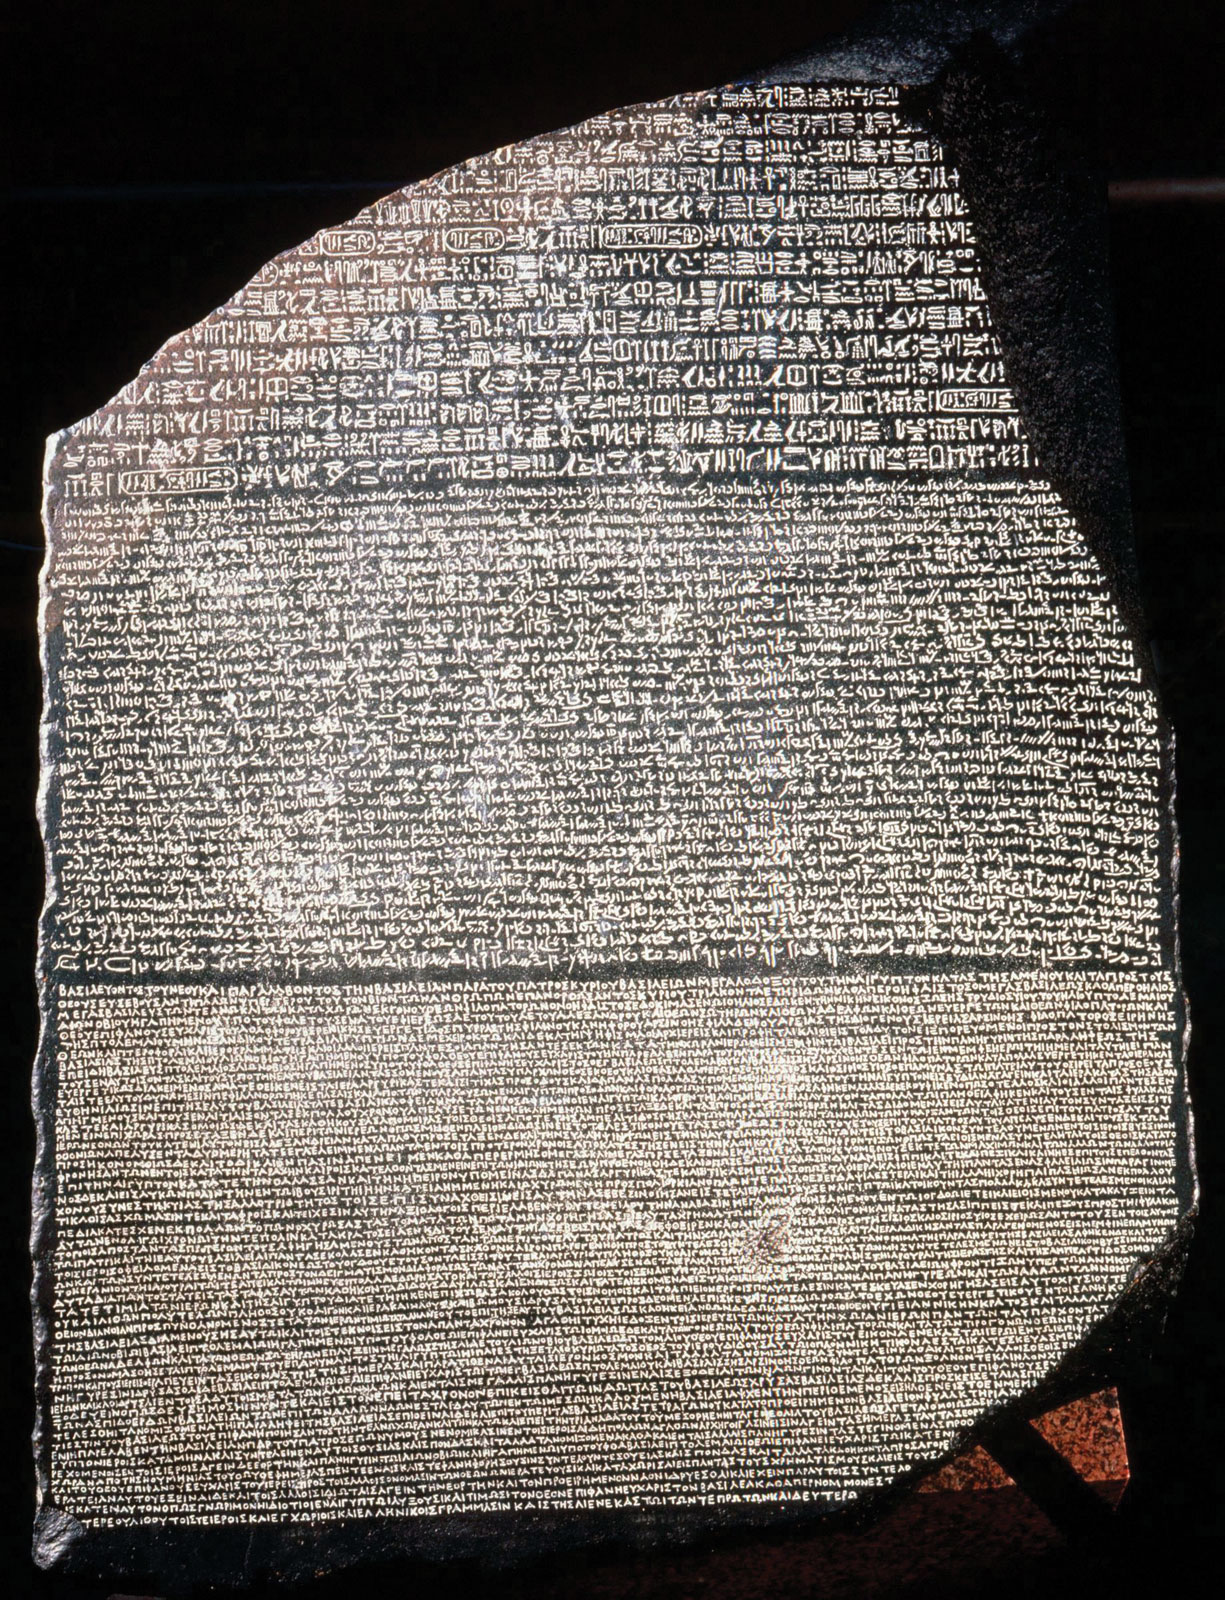 The Rosetta Stone basalt slab from Fort Saint-Julien Egypt 196 BCE in the British Museum London